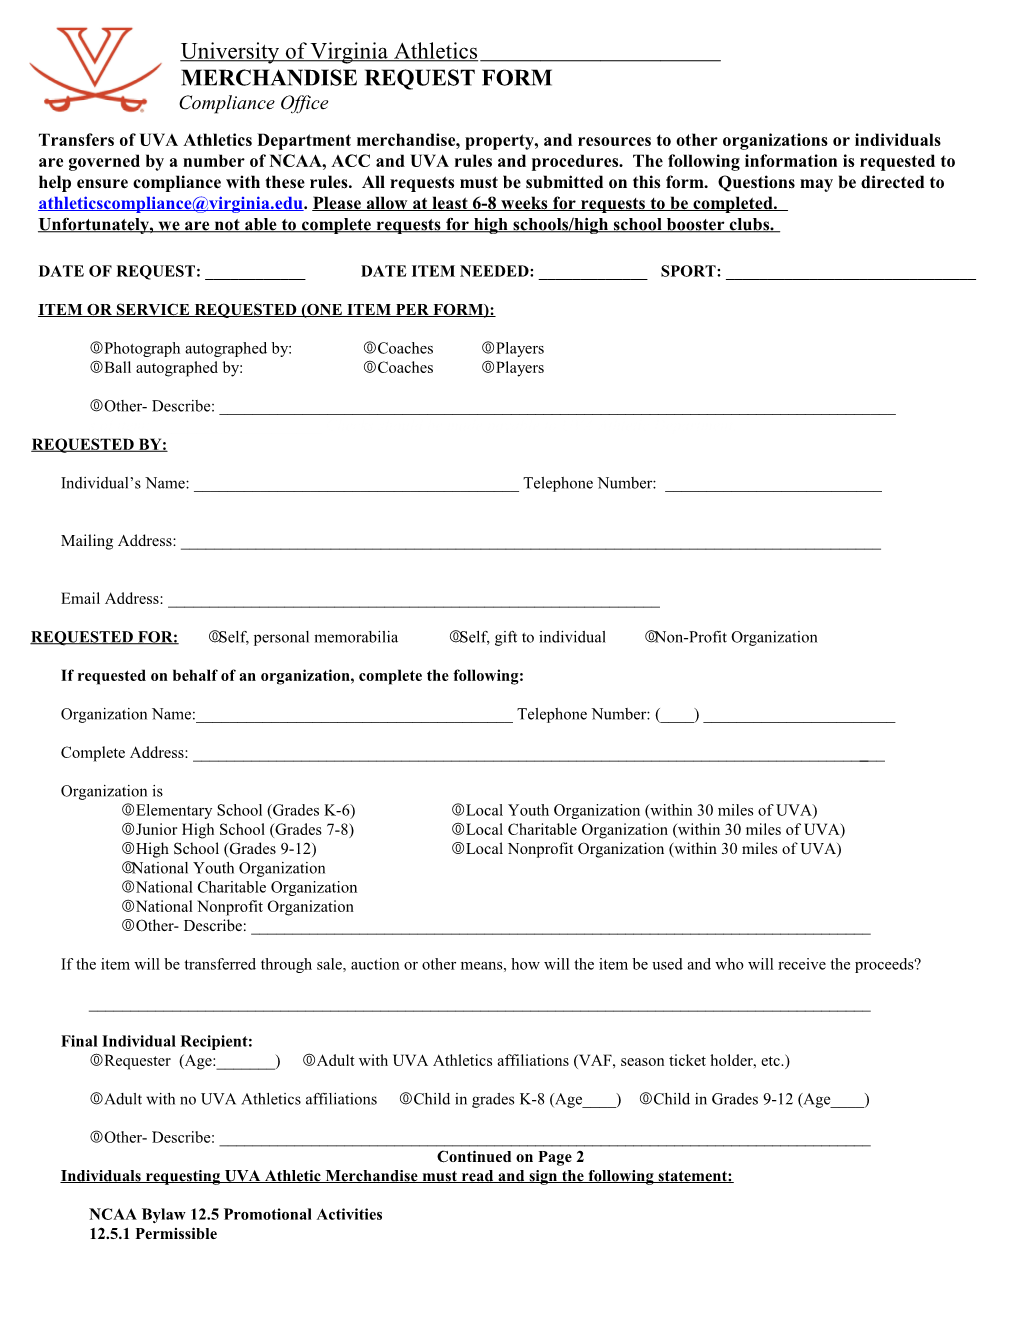 Virginia Athletic Merchandise Request Form